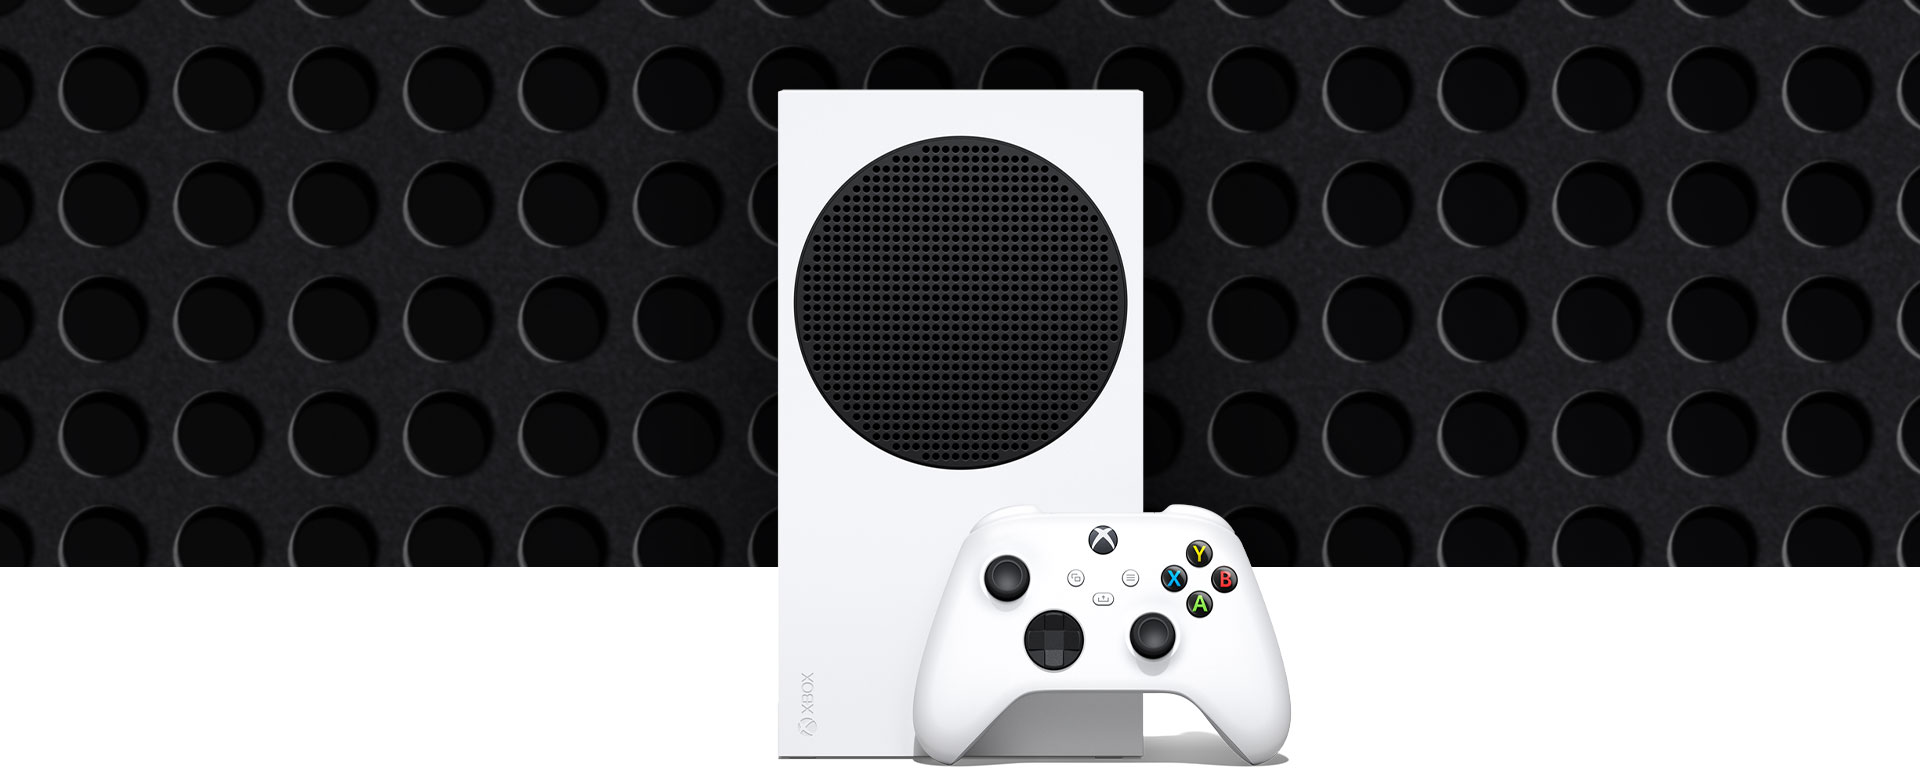 Lodrät Xbox Series S med en trådlös Xbox-handkontroll, Robot White